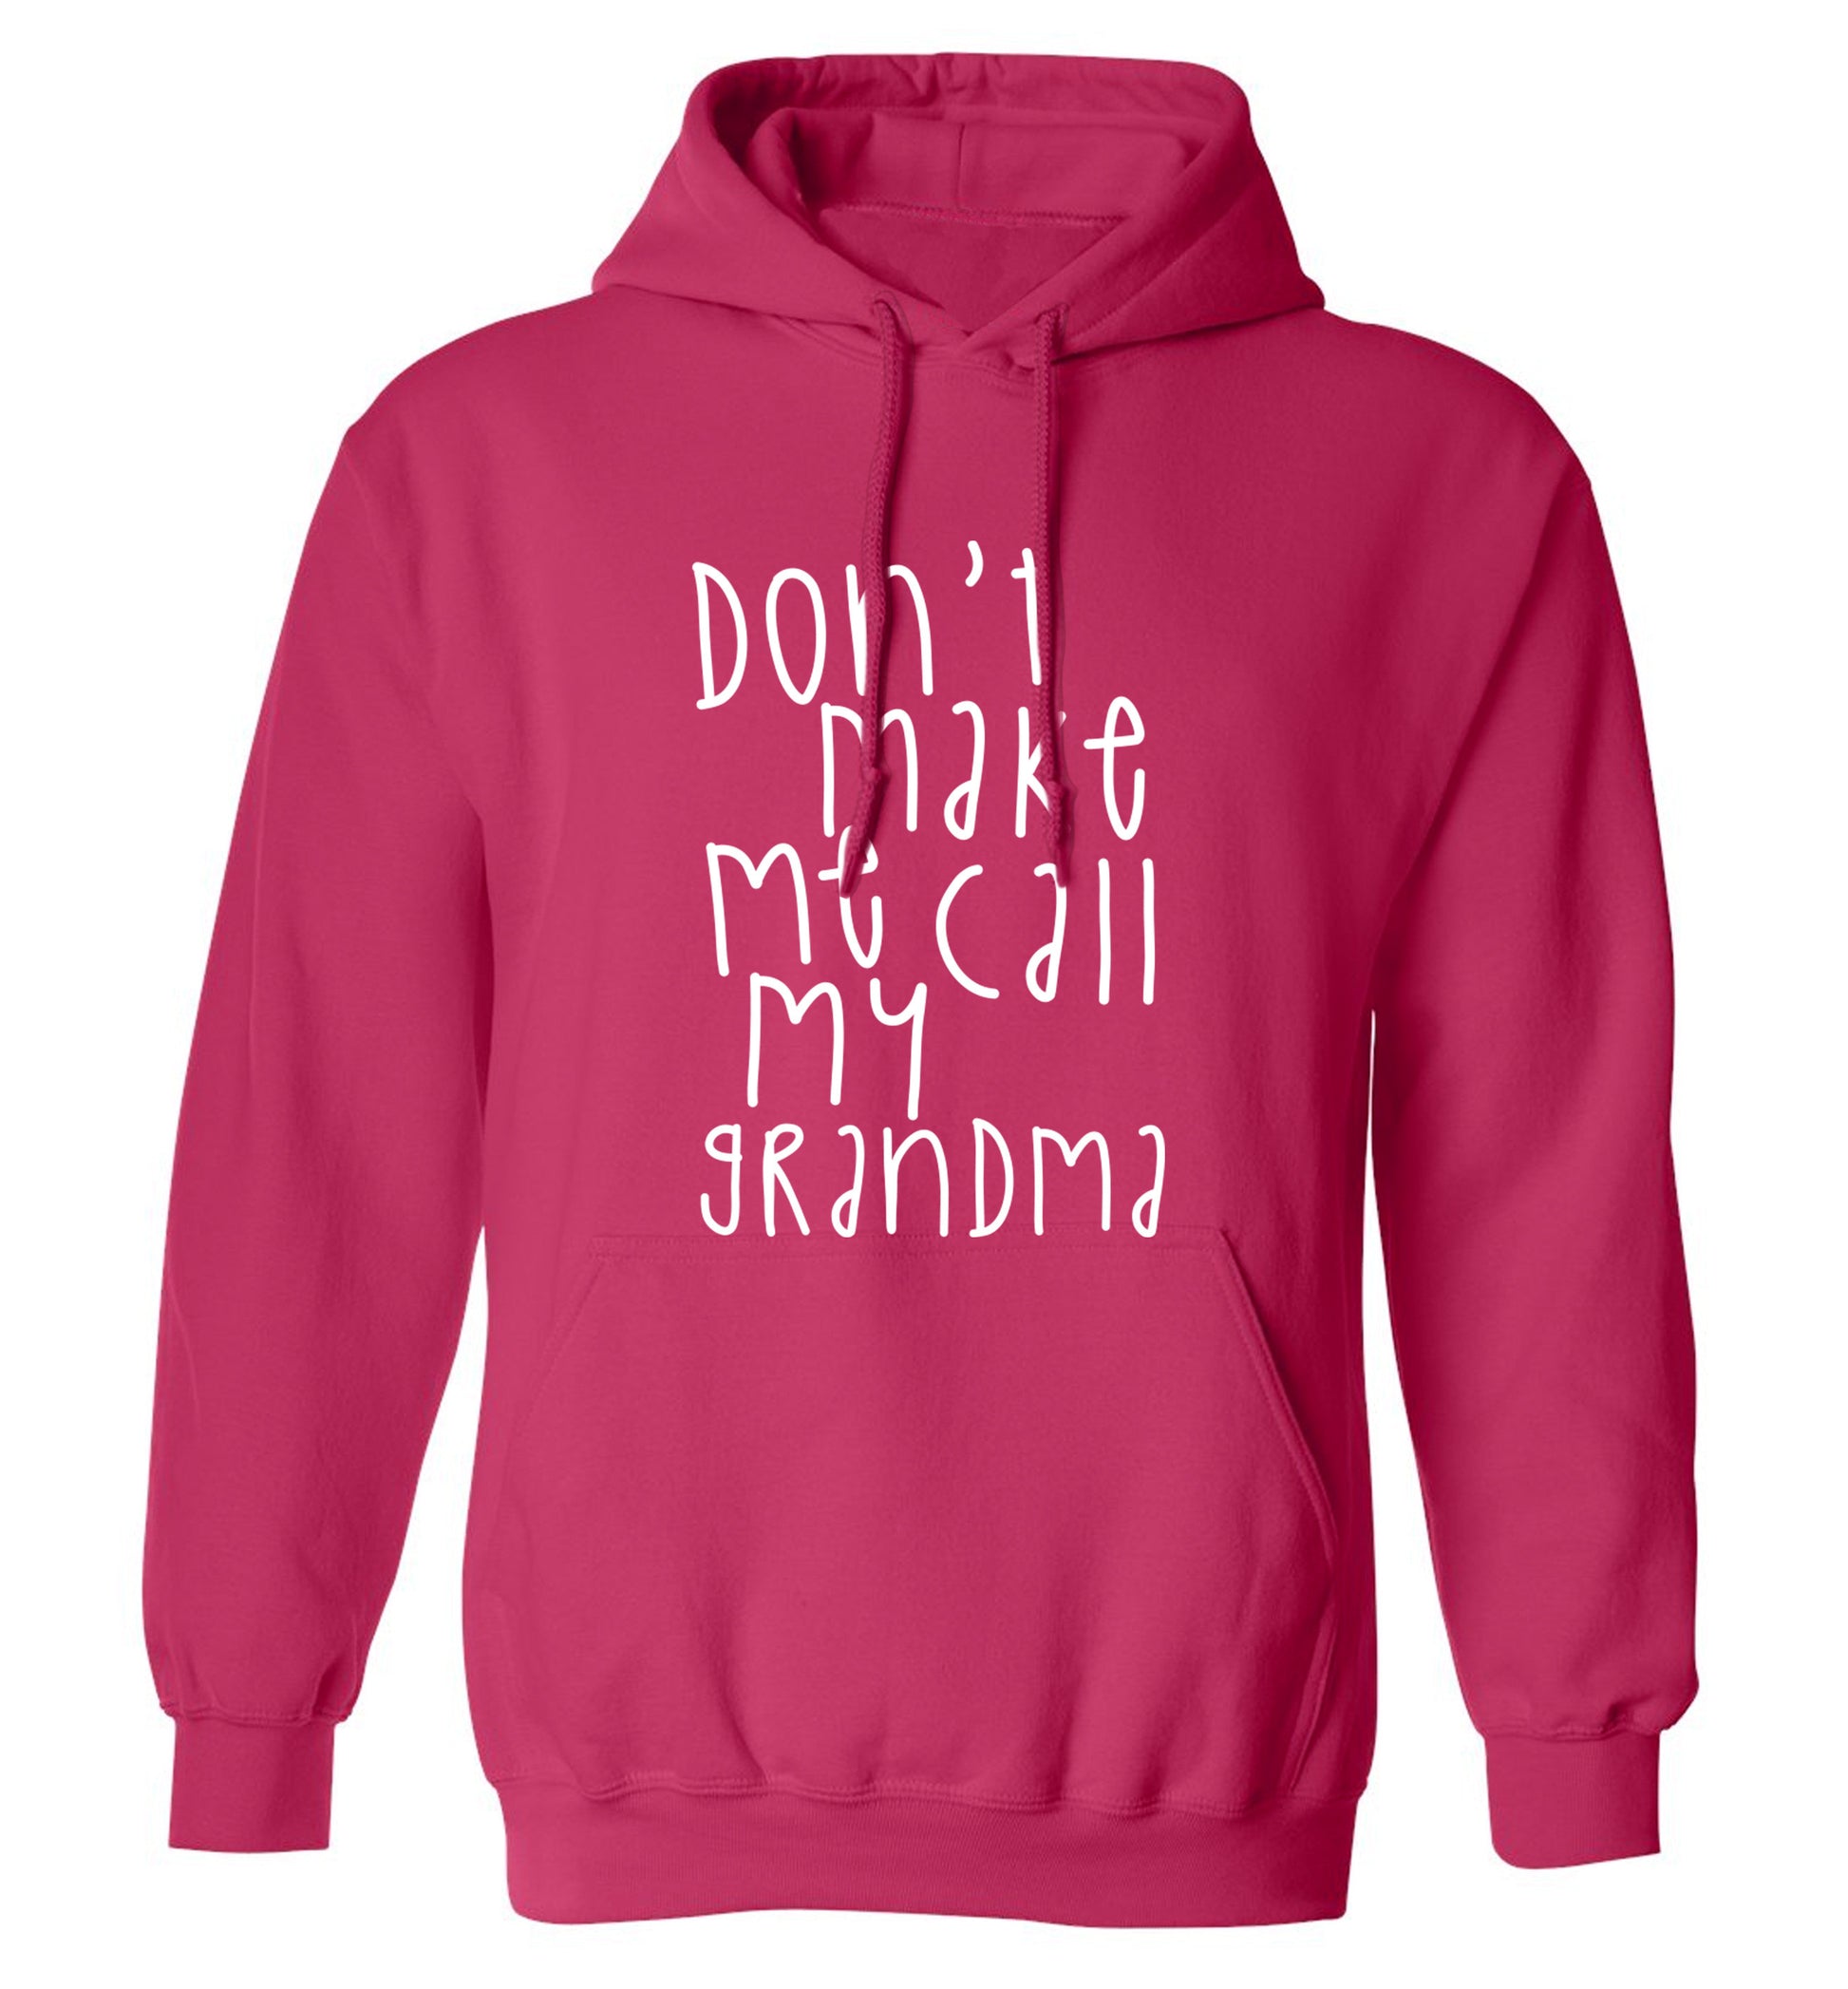 Don't make me call my grandma adults unisex pink hoodie 2XL